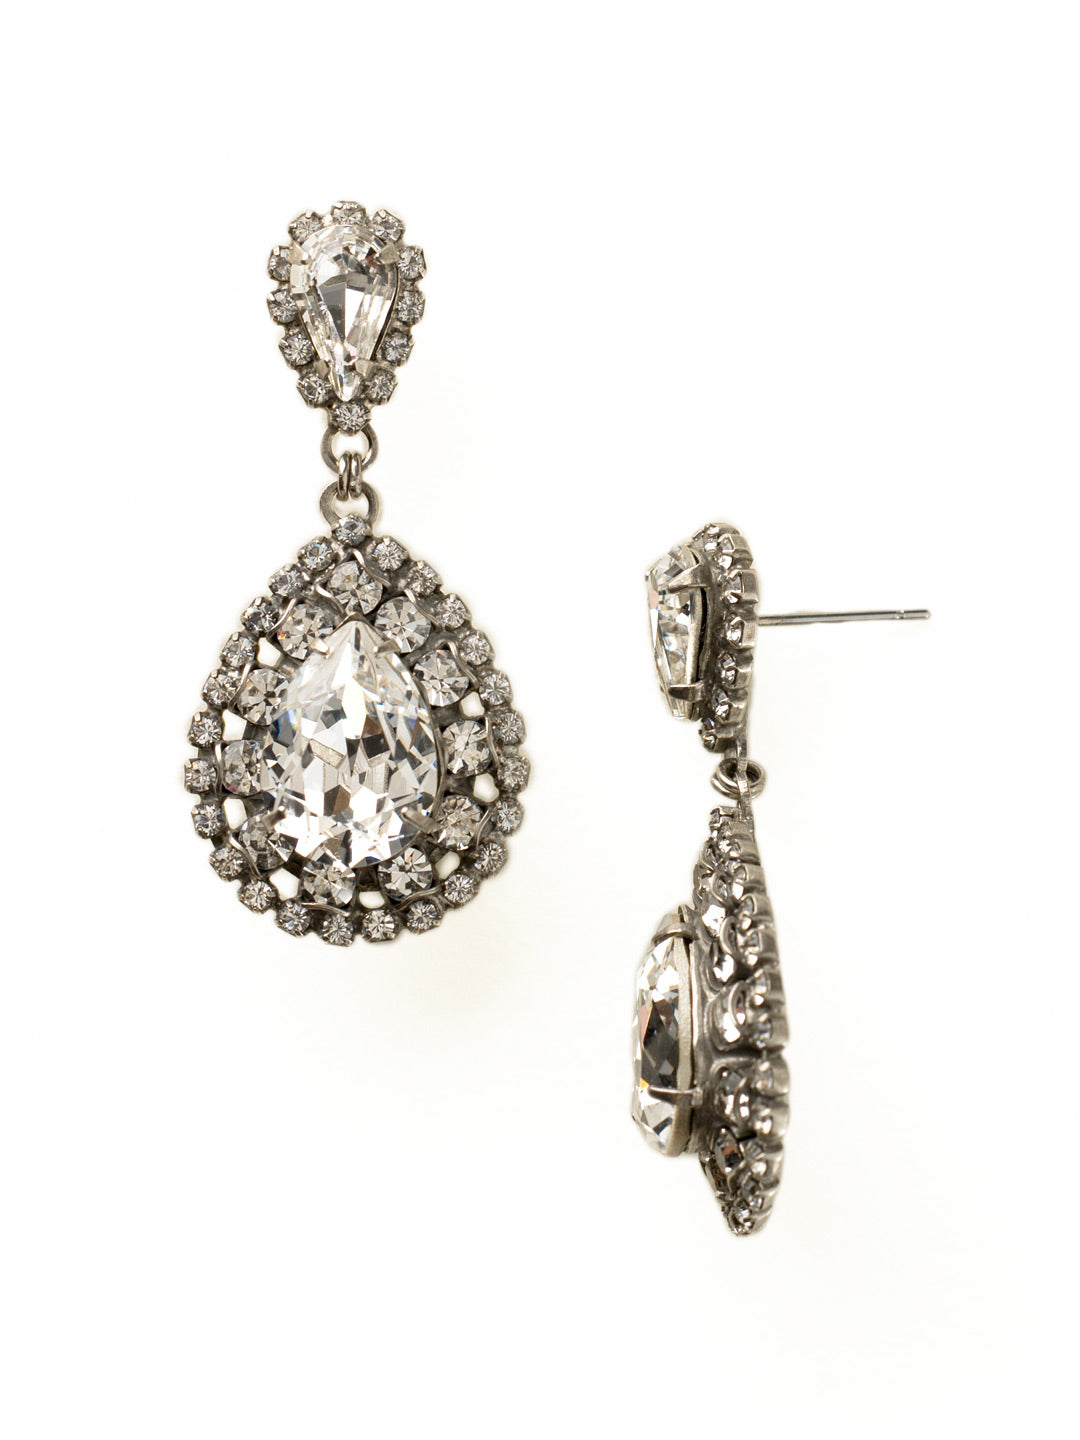 Product Image: Oval Encrusted Crystal Dangle Earrings